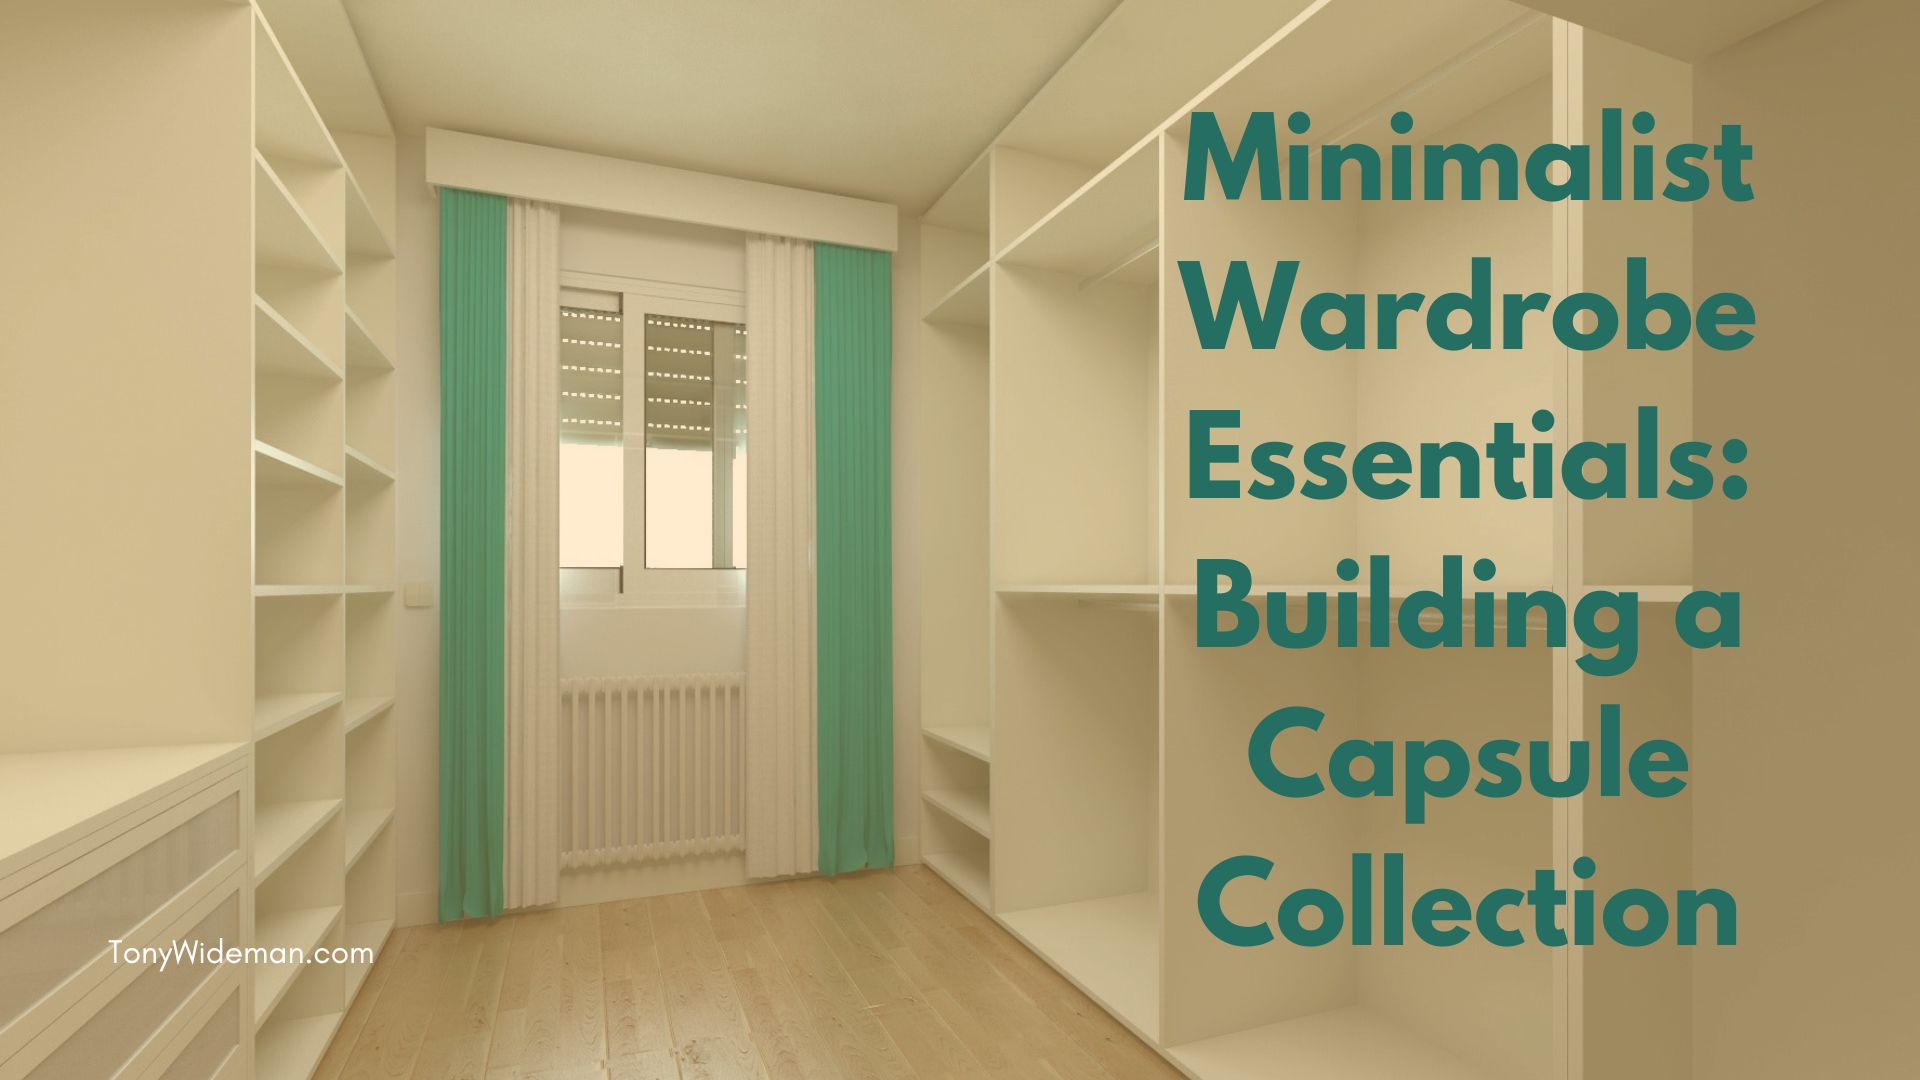 Minimalist Wardrobe Essentials: Building a Capsule Collection